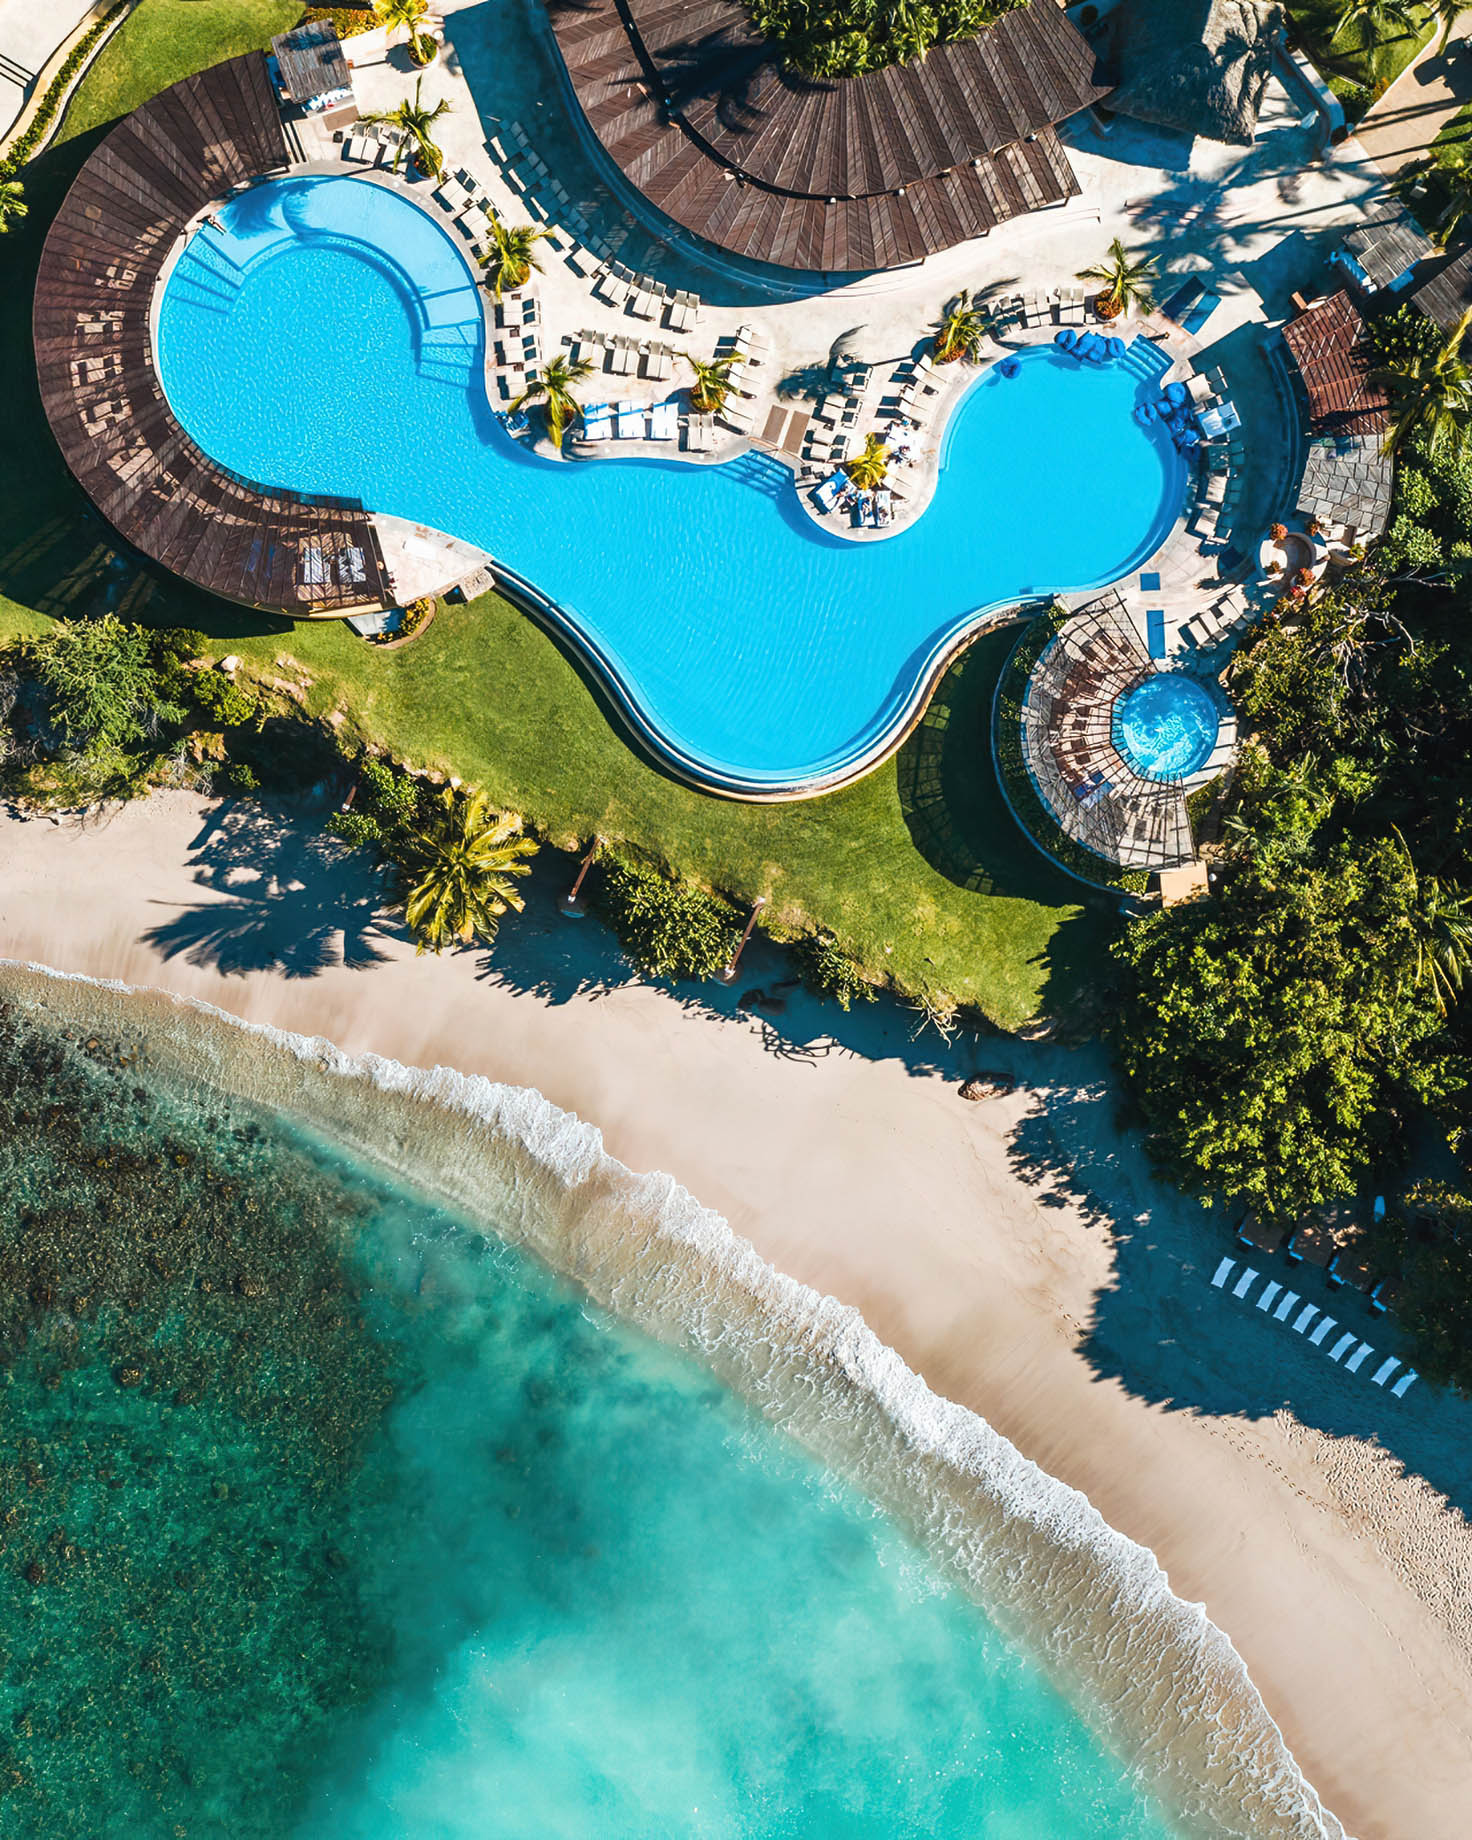 Four Seasons Resort Punta Mita – Nayarit, Mexico – Infinity Pool and Private White Sand Beach